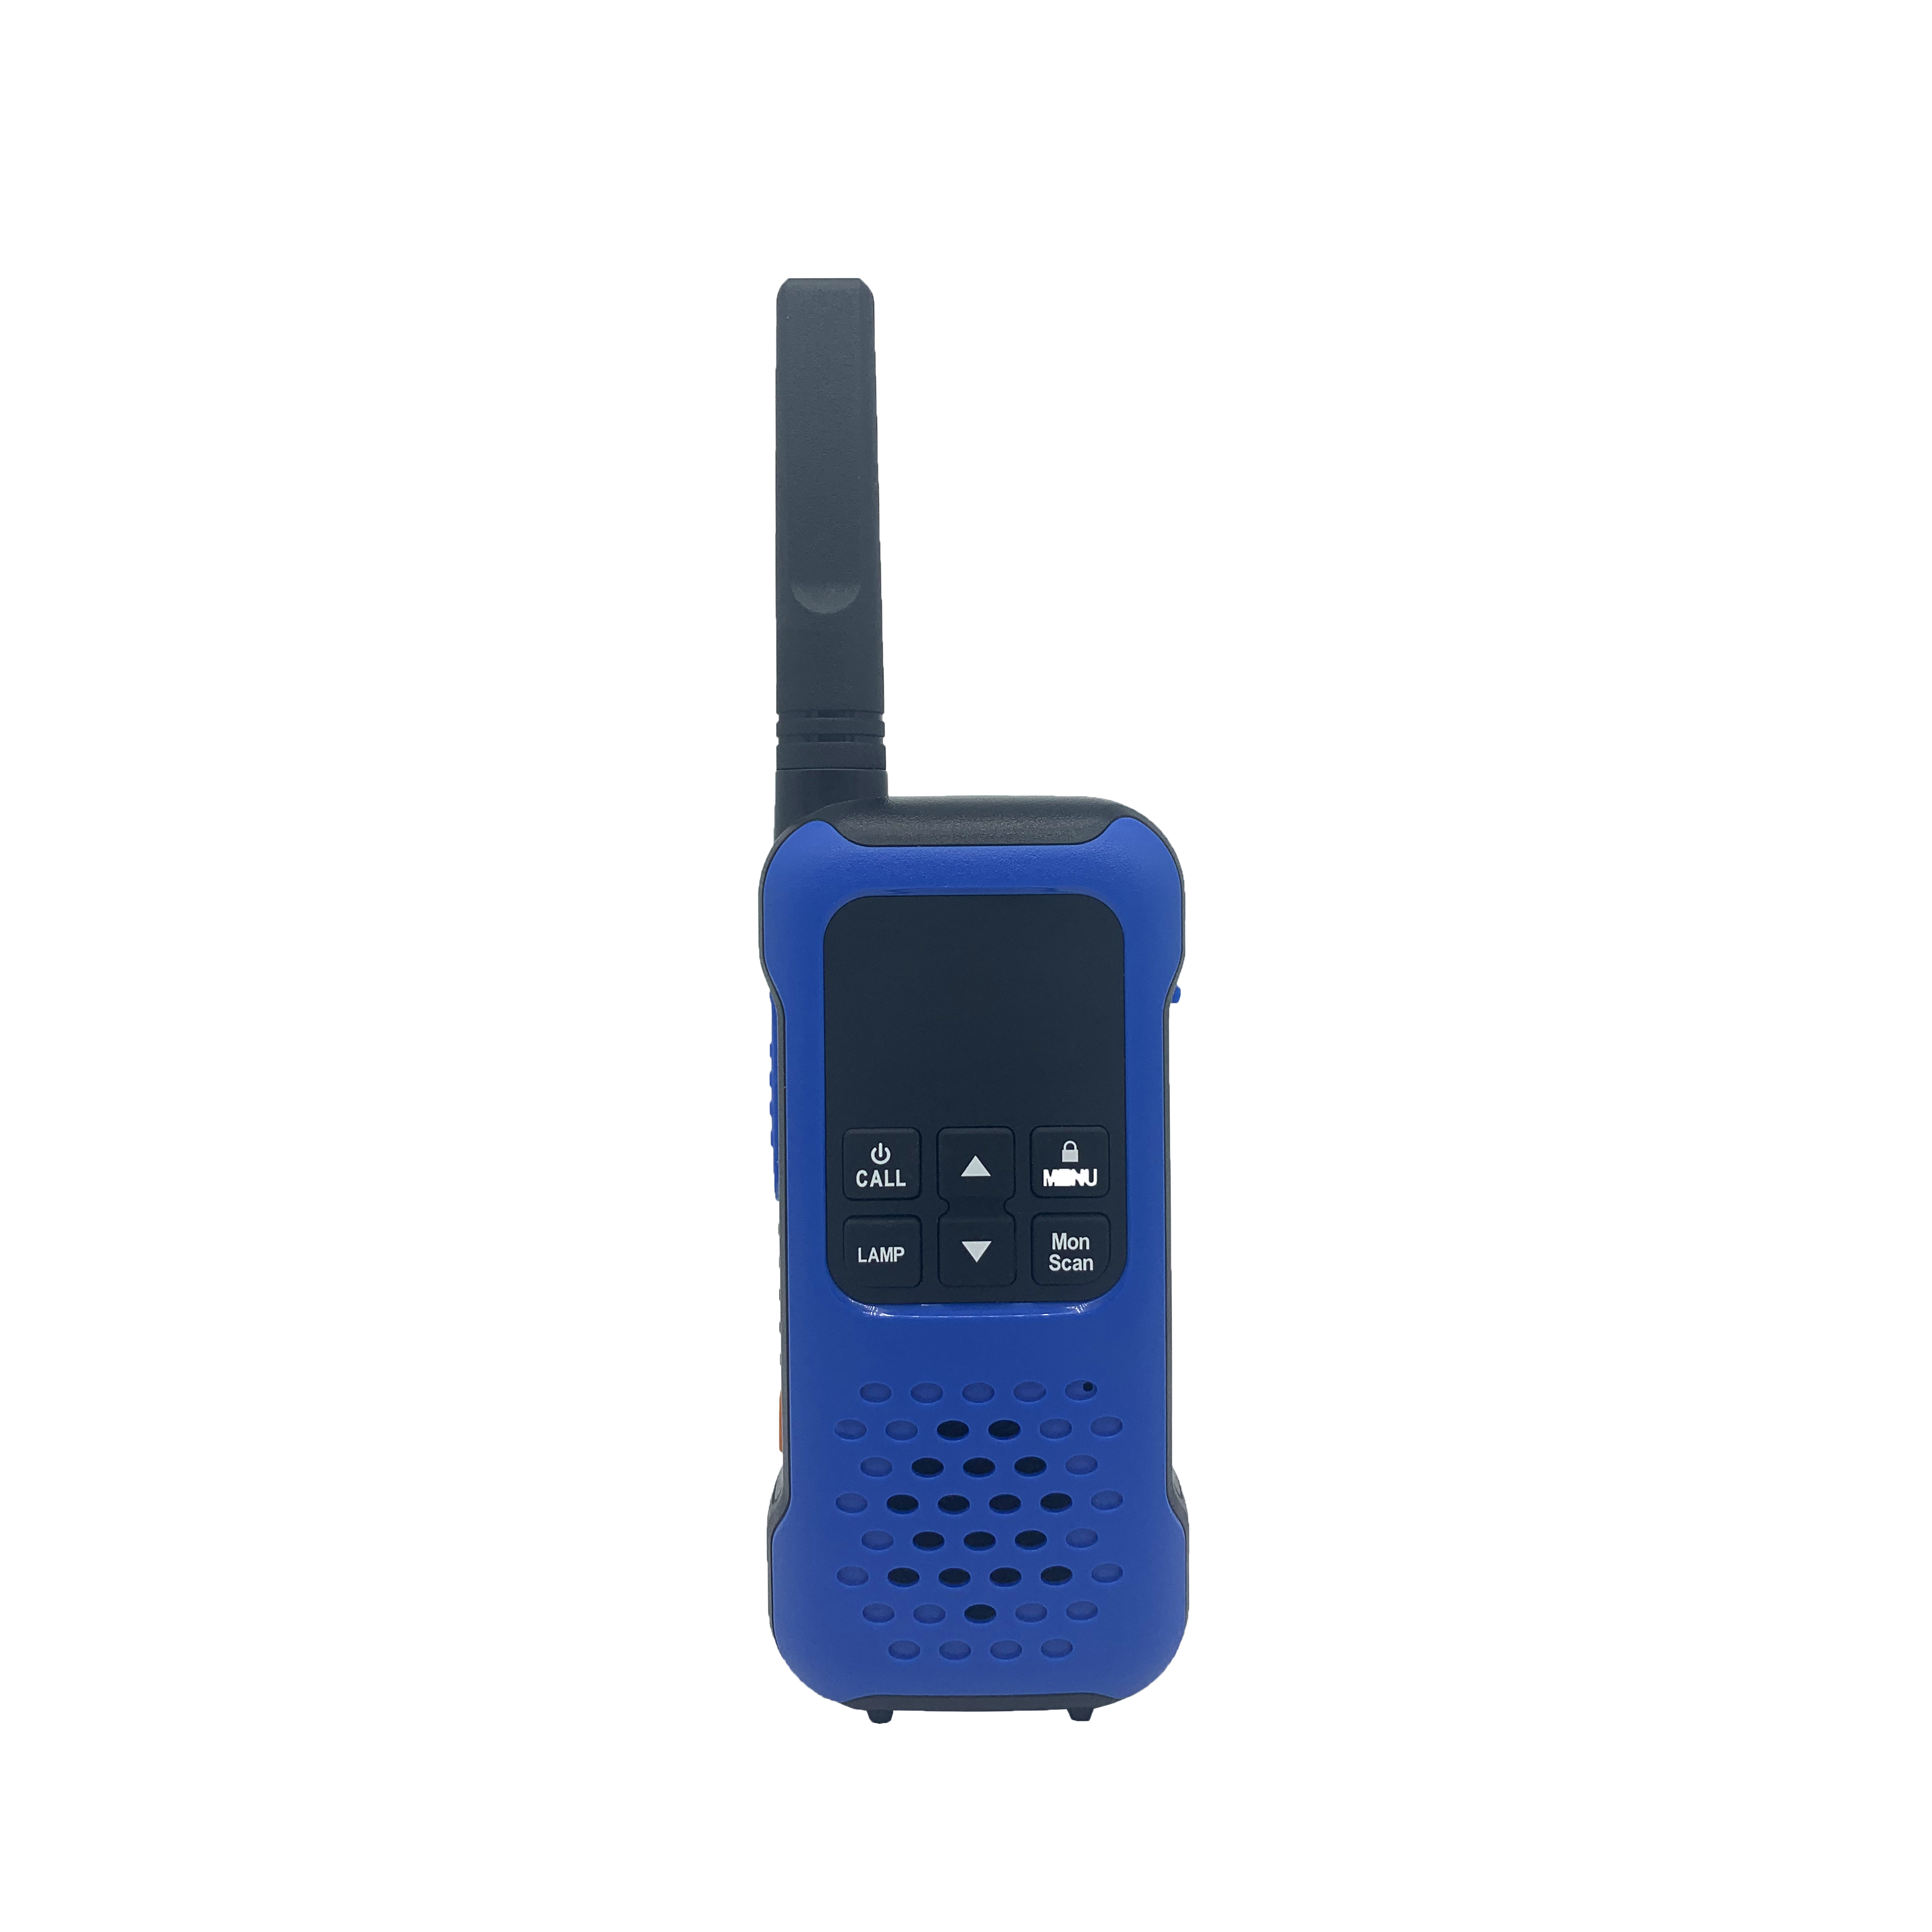 QYT analog long distance walkie talkie radio pmr446